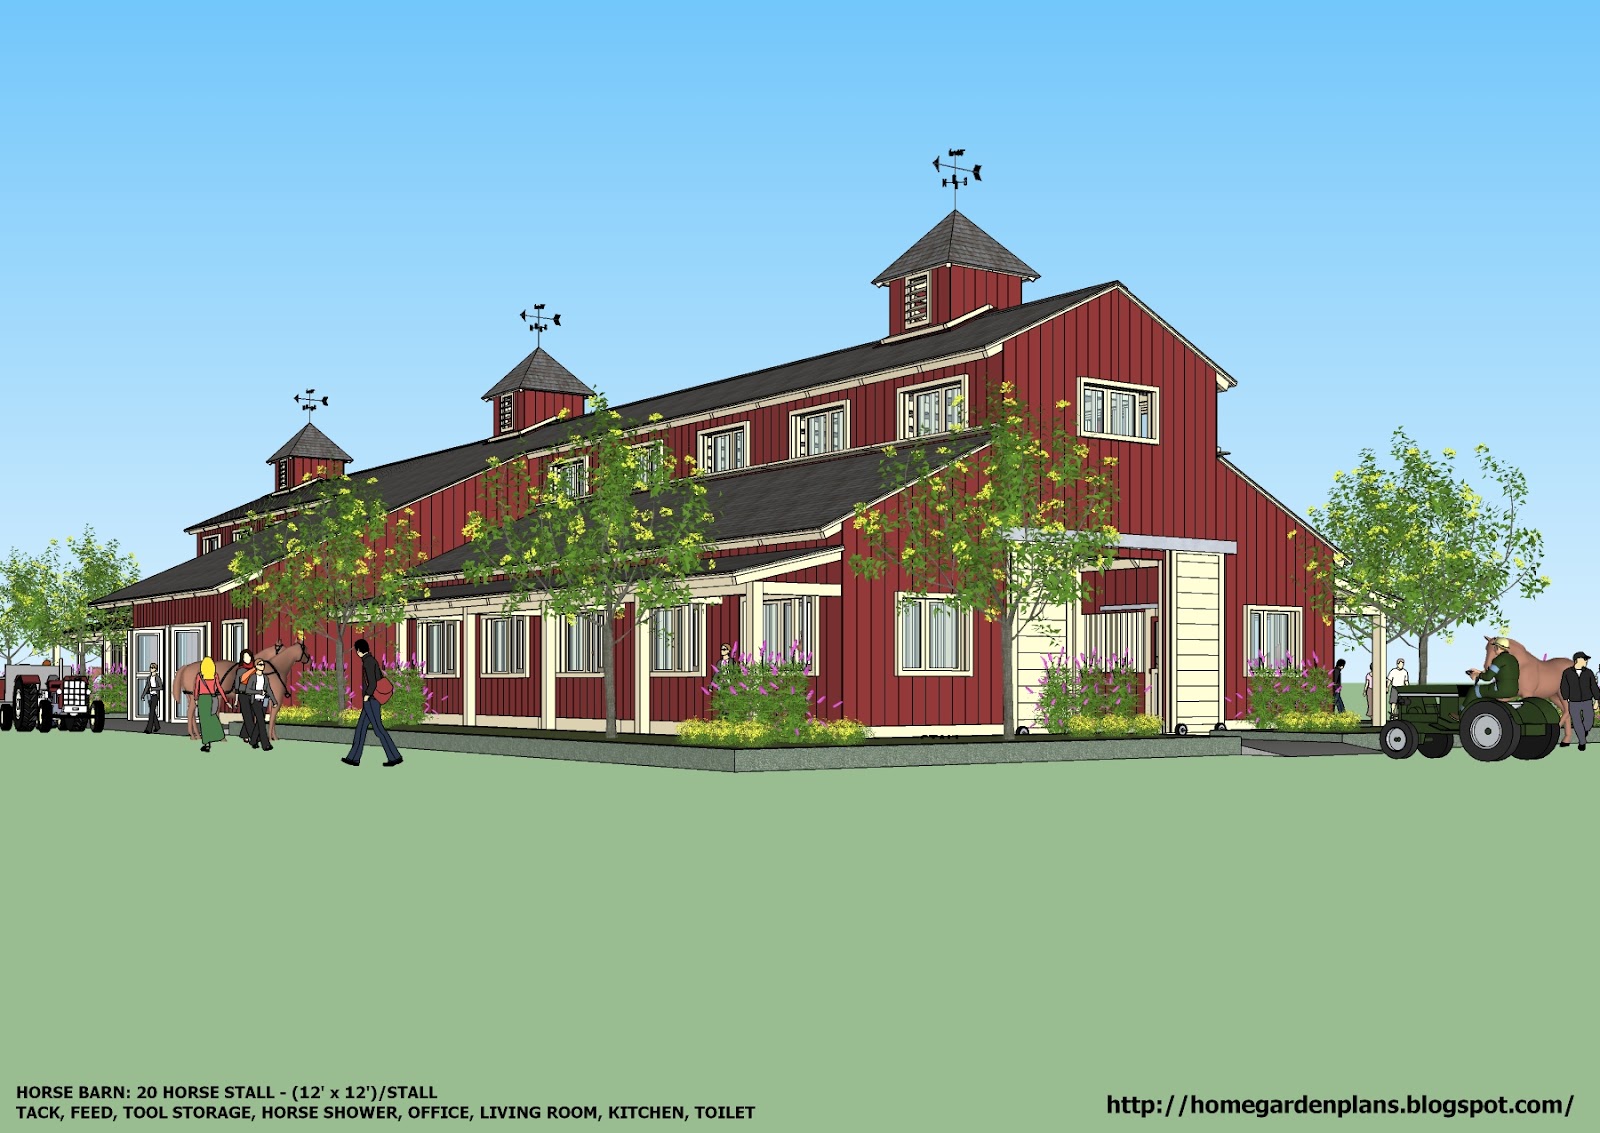 home garden plans: b20h - large horse barn for 20 horse